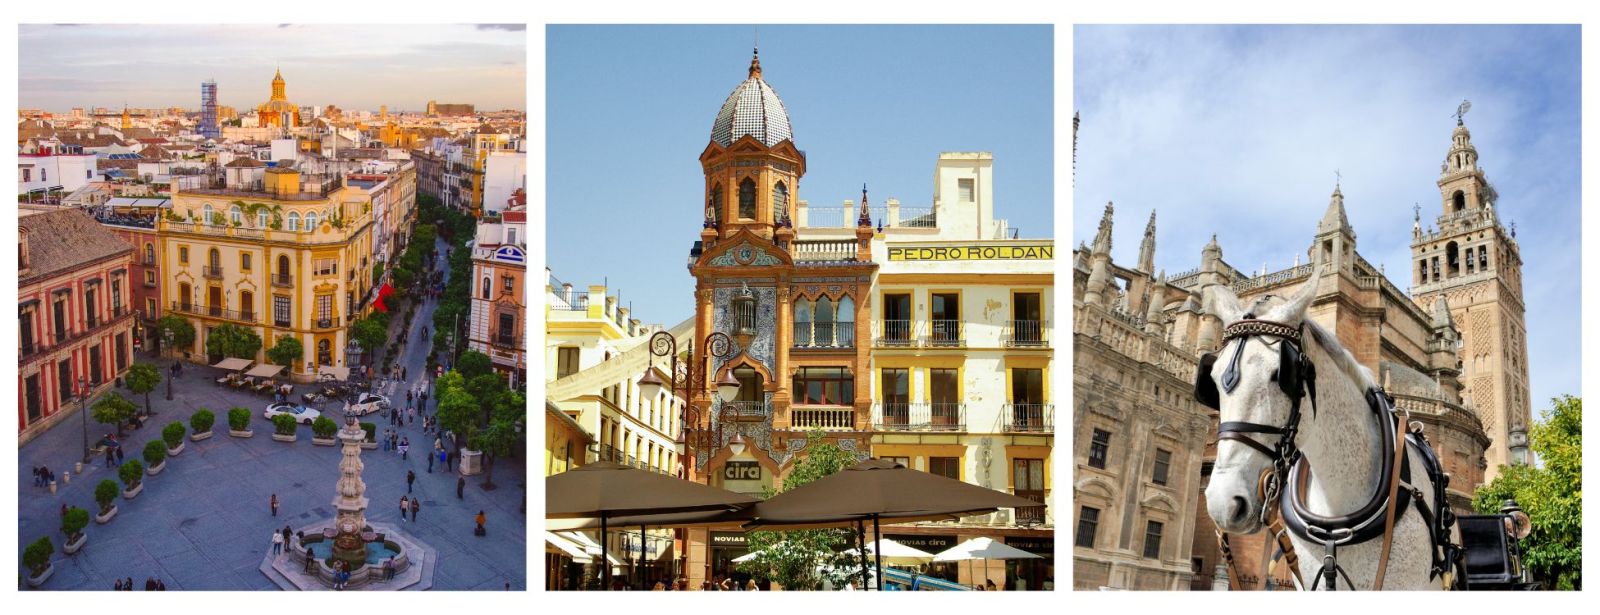 Seville Holidays. Historical City Centre